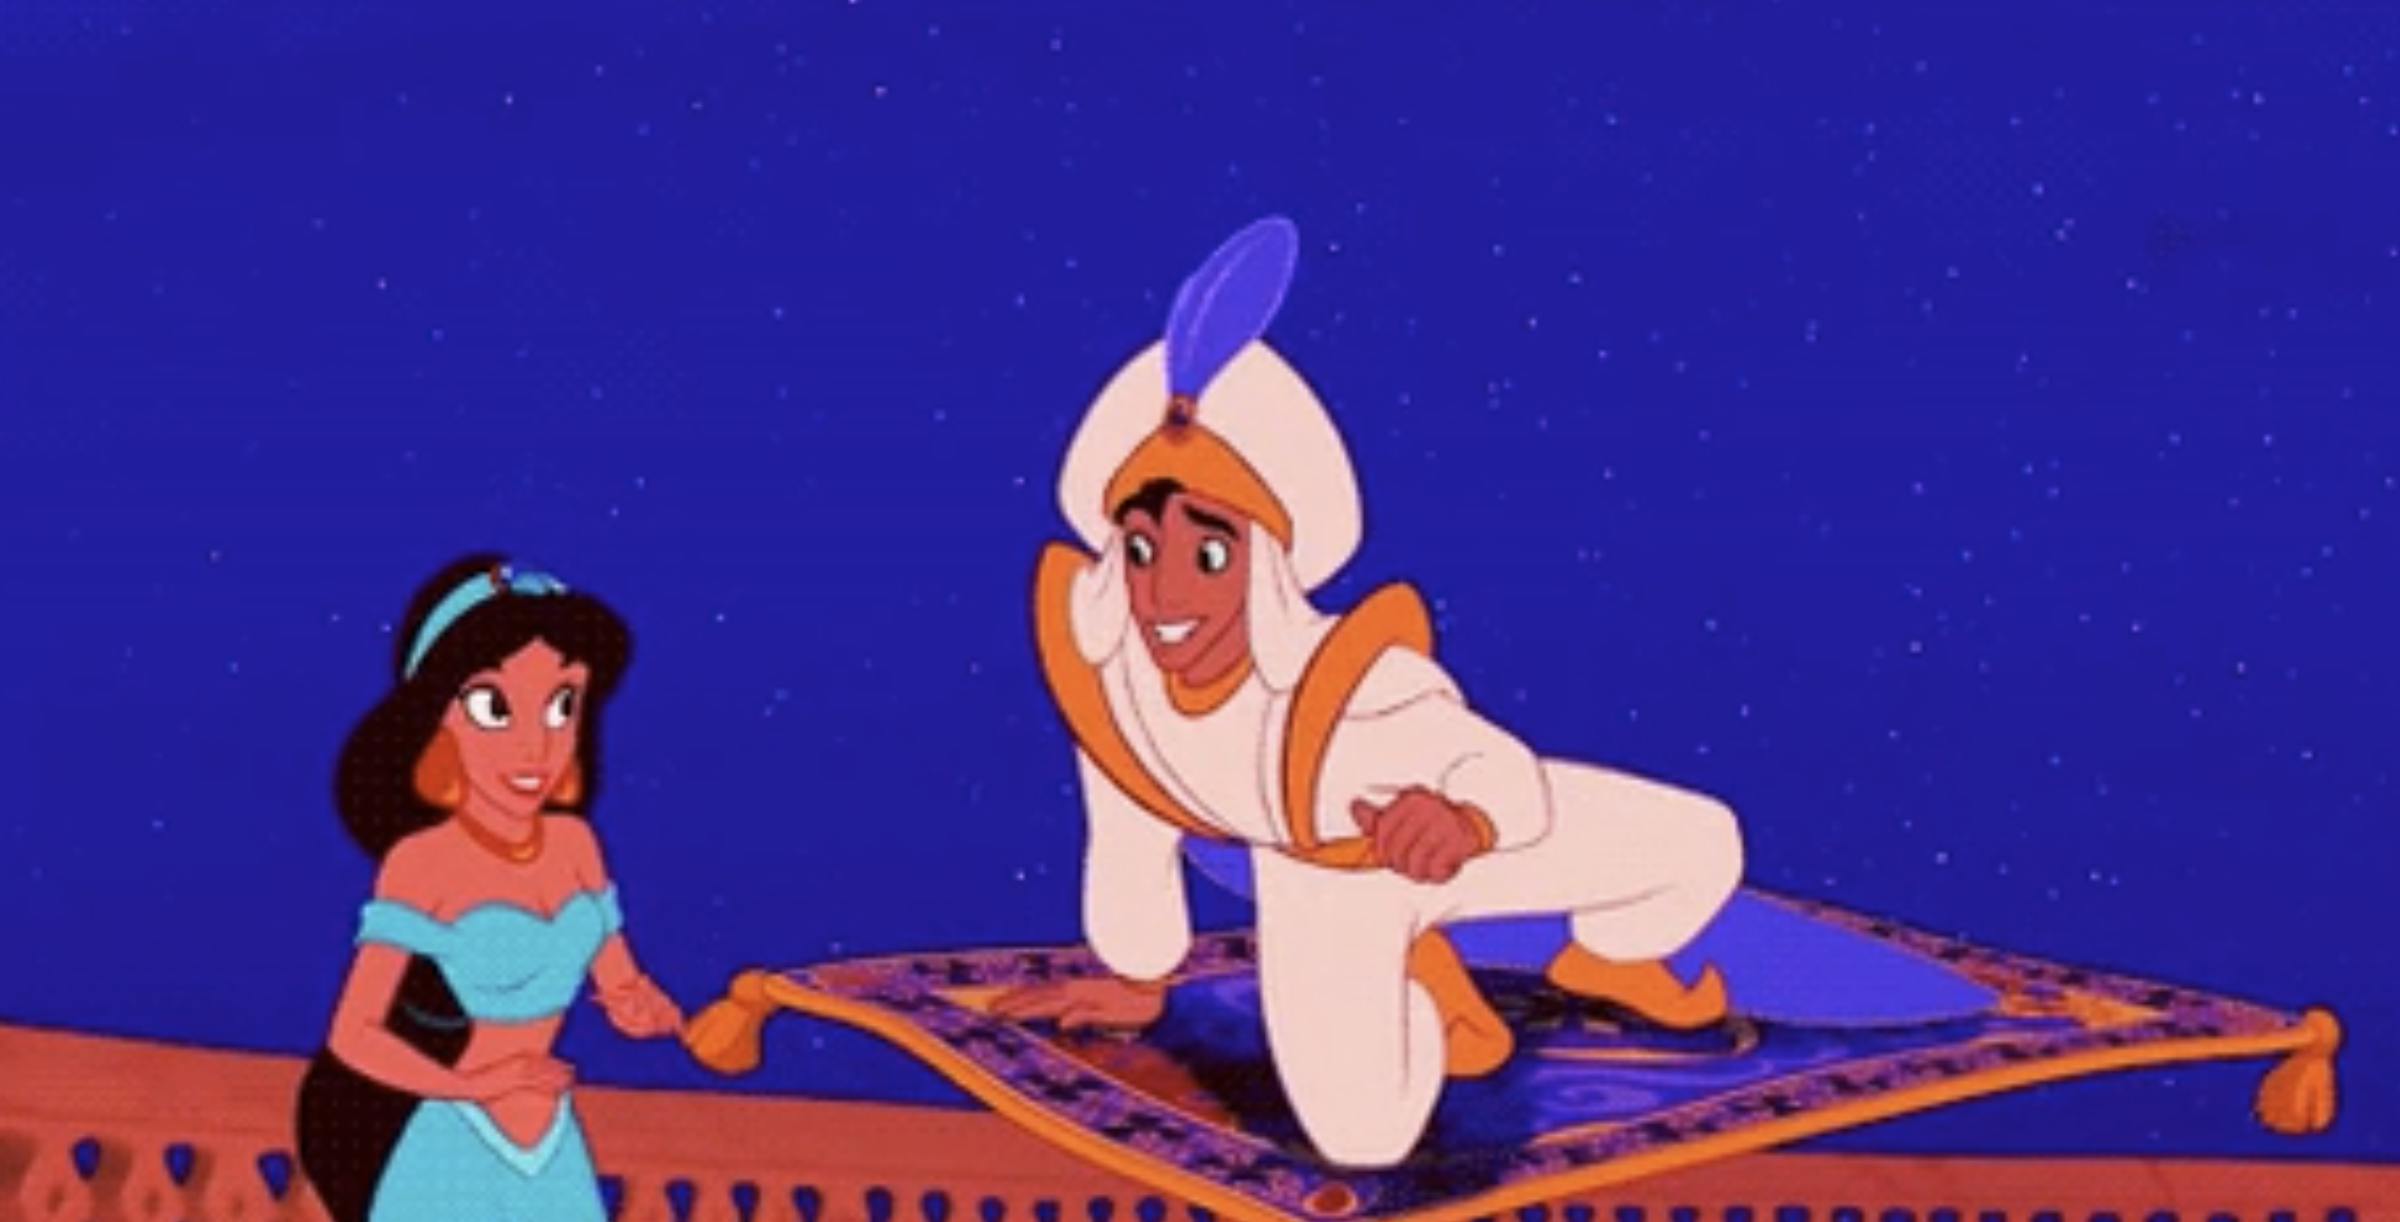 Aladdin, wearing a turban, picks up Princess Jasmine on his magic carpet